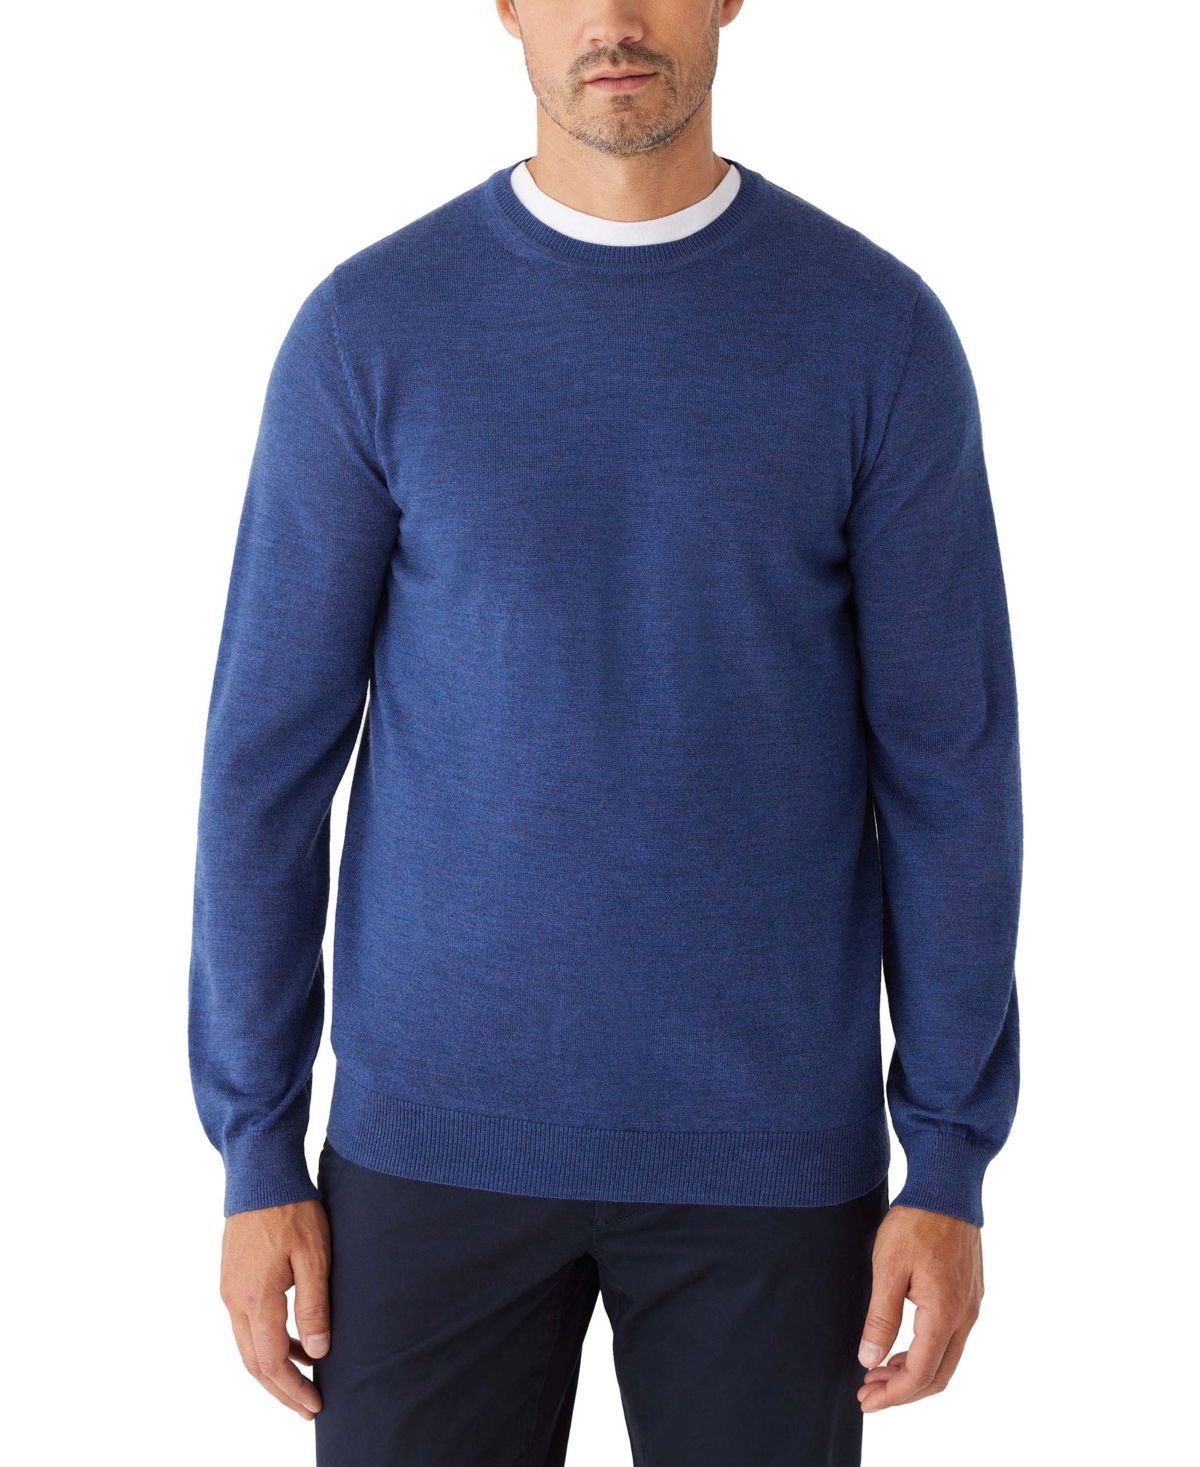 Men's Merino Wool Crewneck Long-Sleeve Sweater - Royal Blue